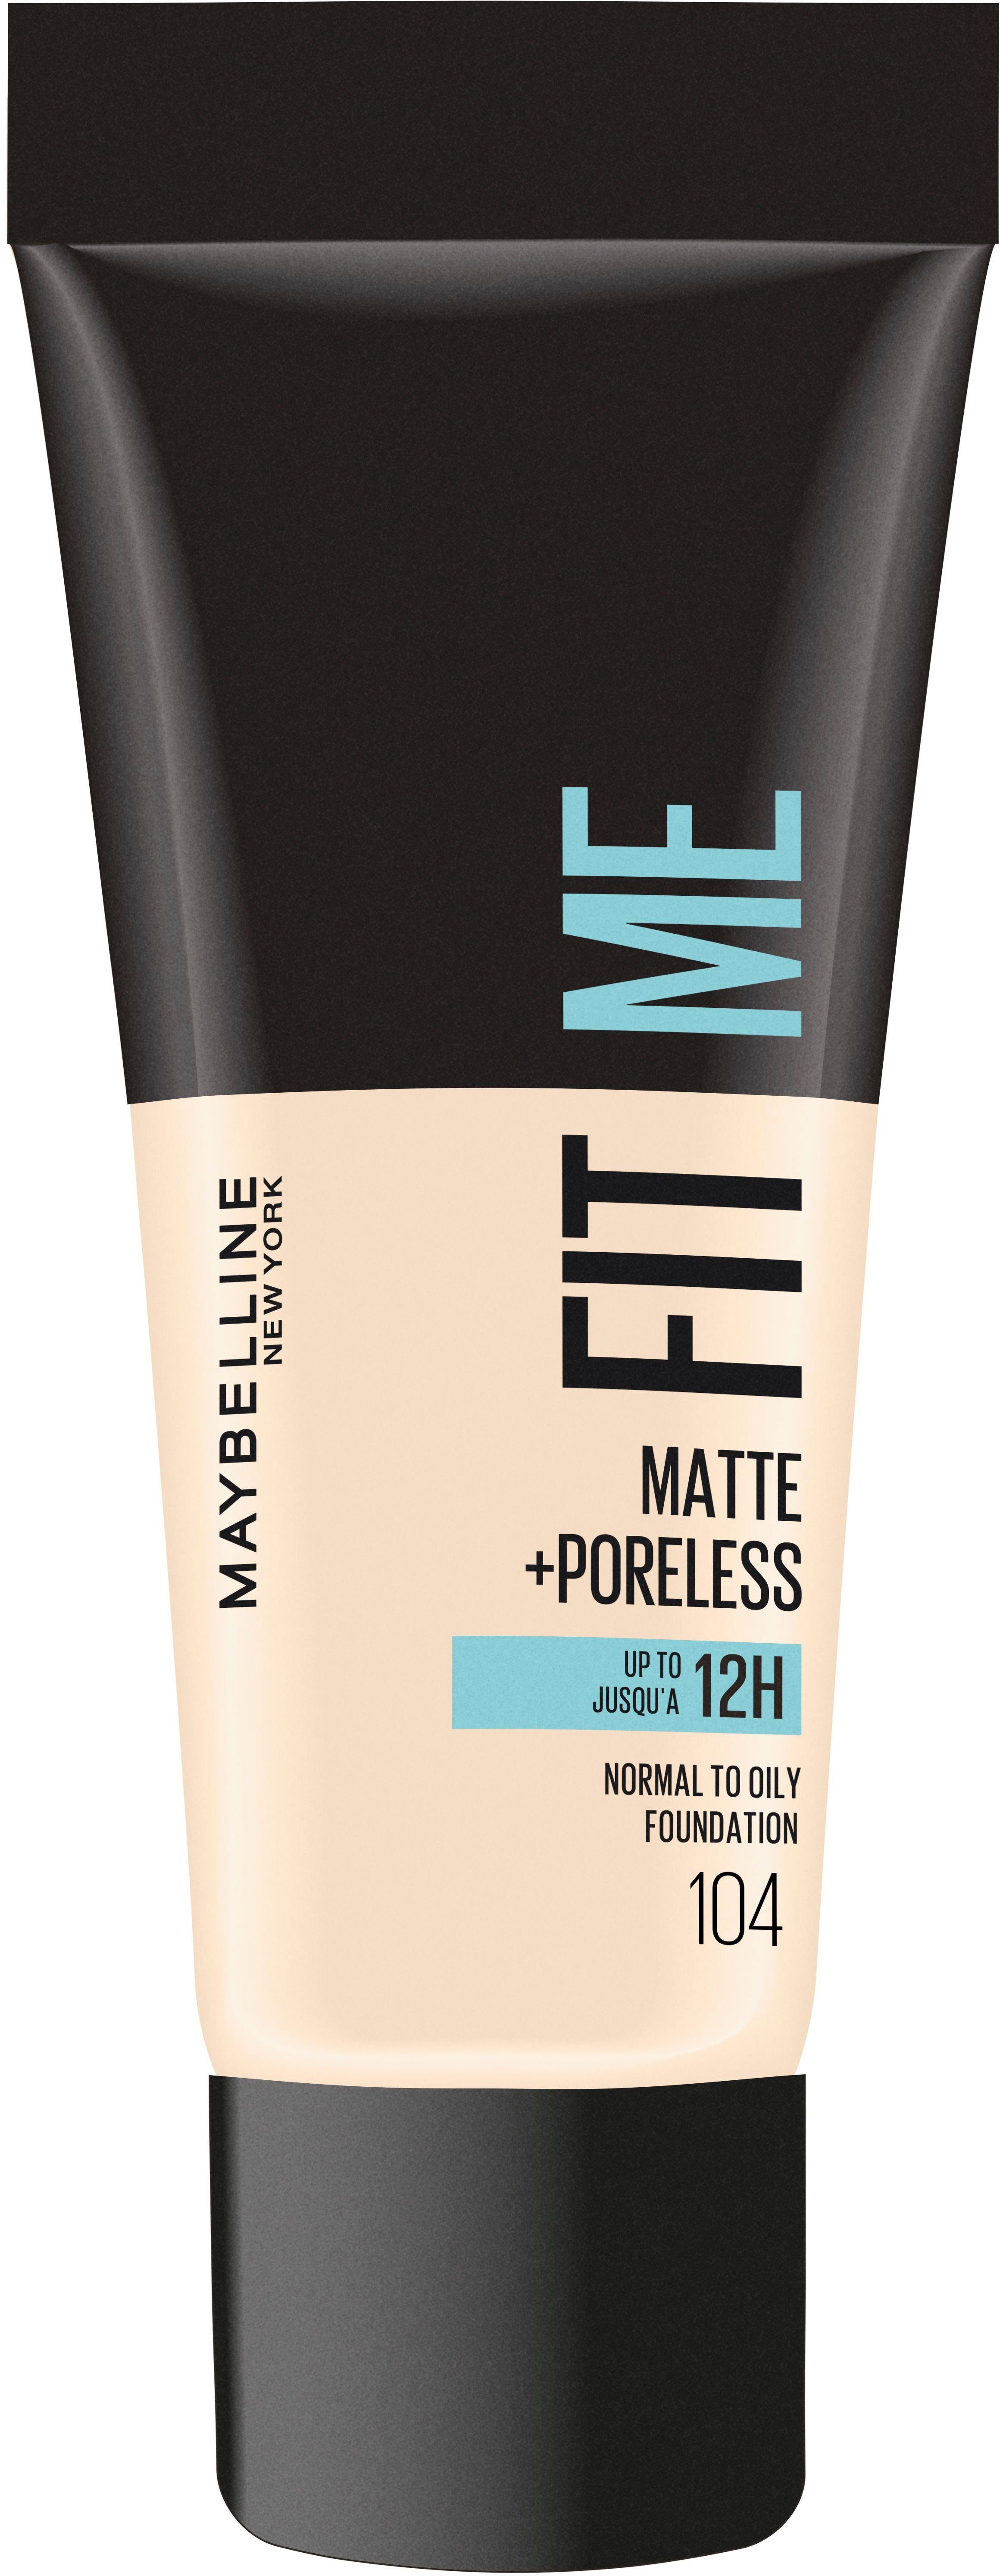 New Make-Up Foundation Maybelline + Matte Poreless York Fit MAYBELLINE NEW Me! YORK